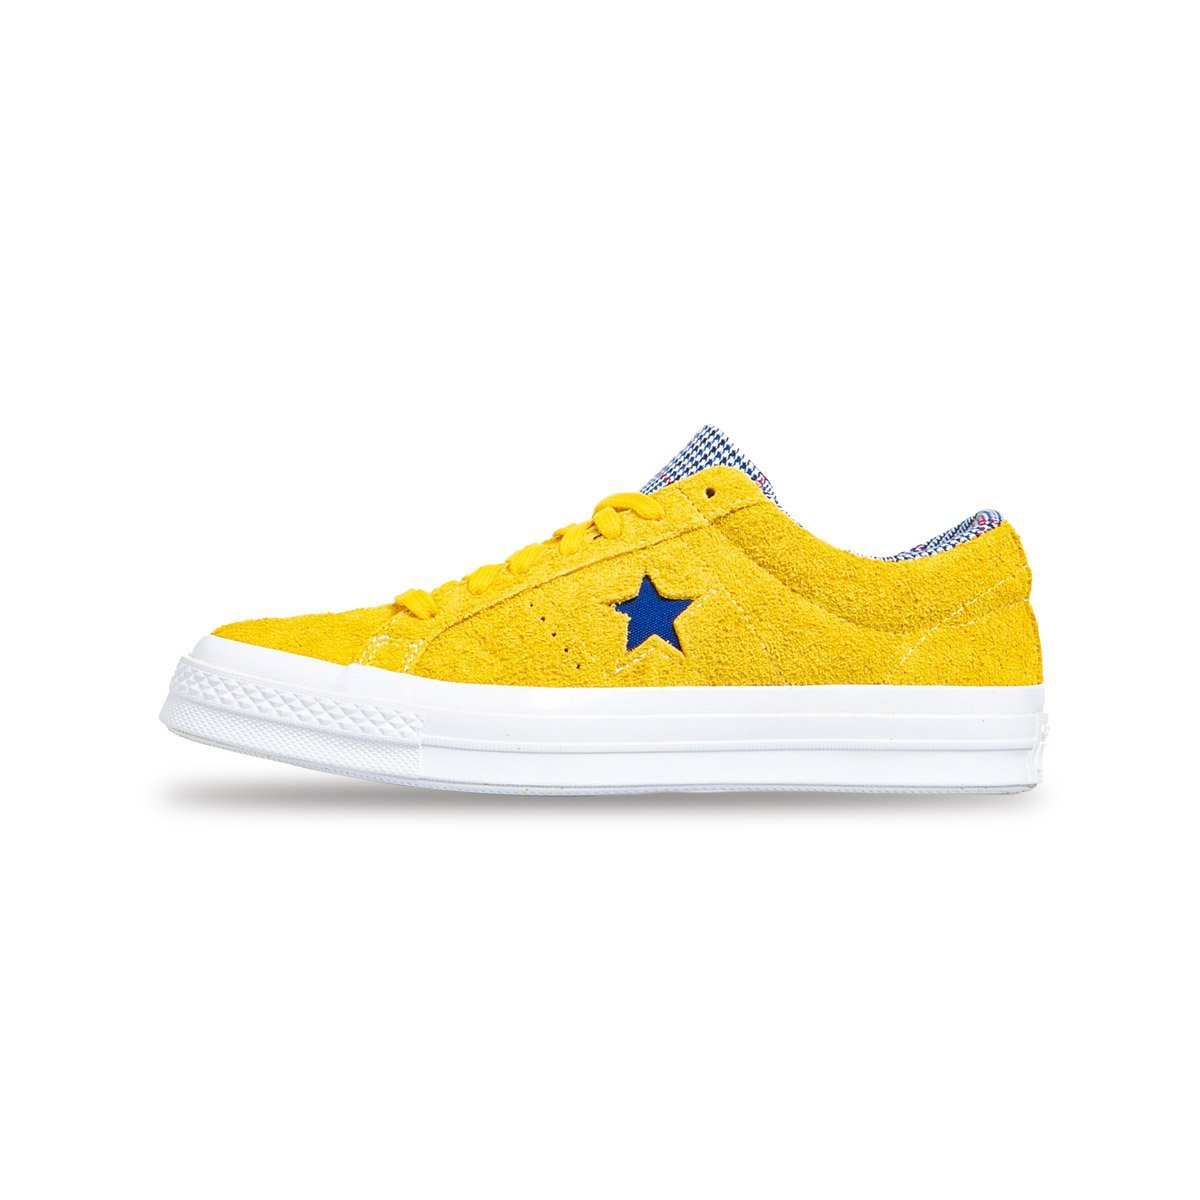 Sneakers Converse One Star OX amarillo/rush blue/university (166848C) |  Bludshop.com